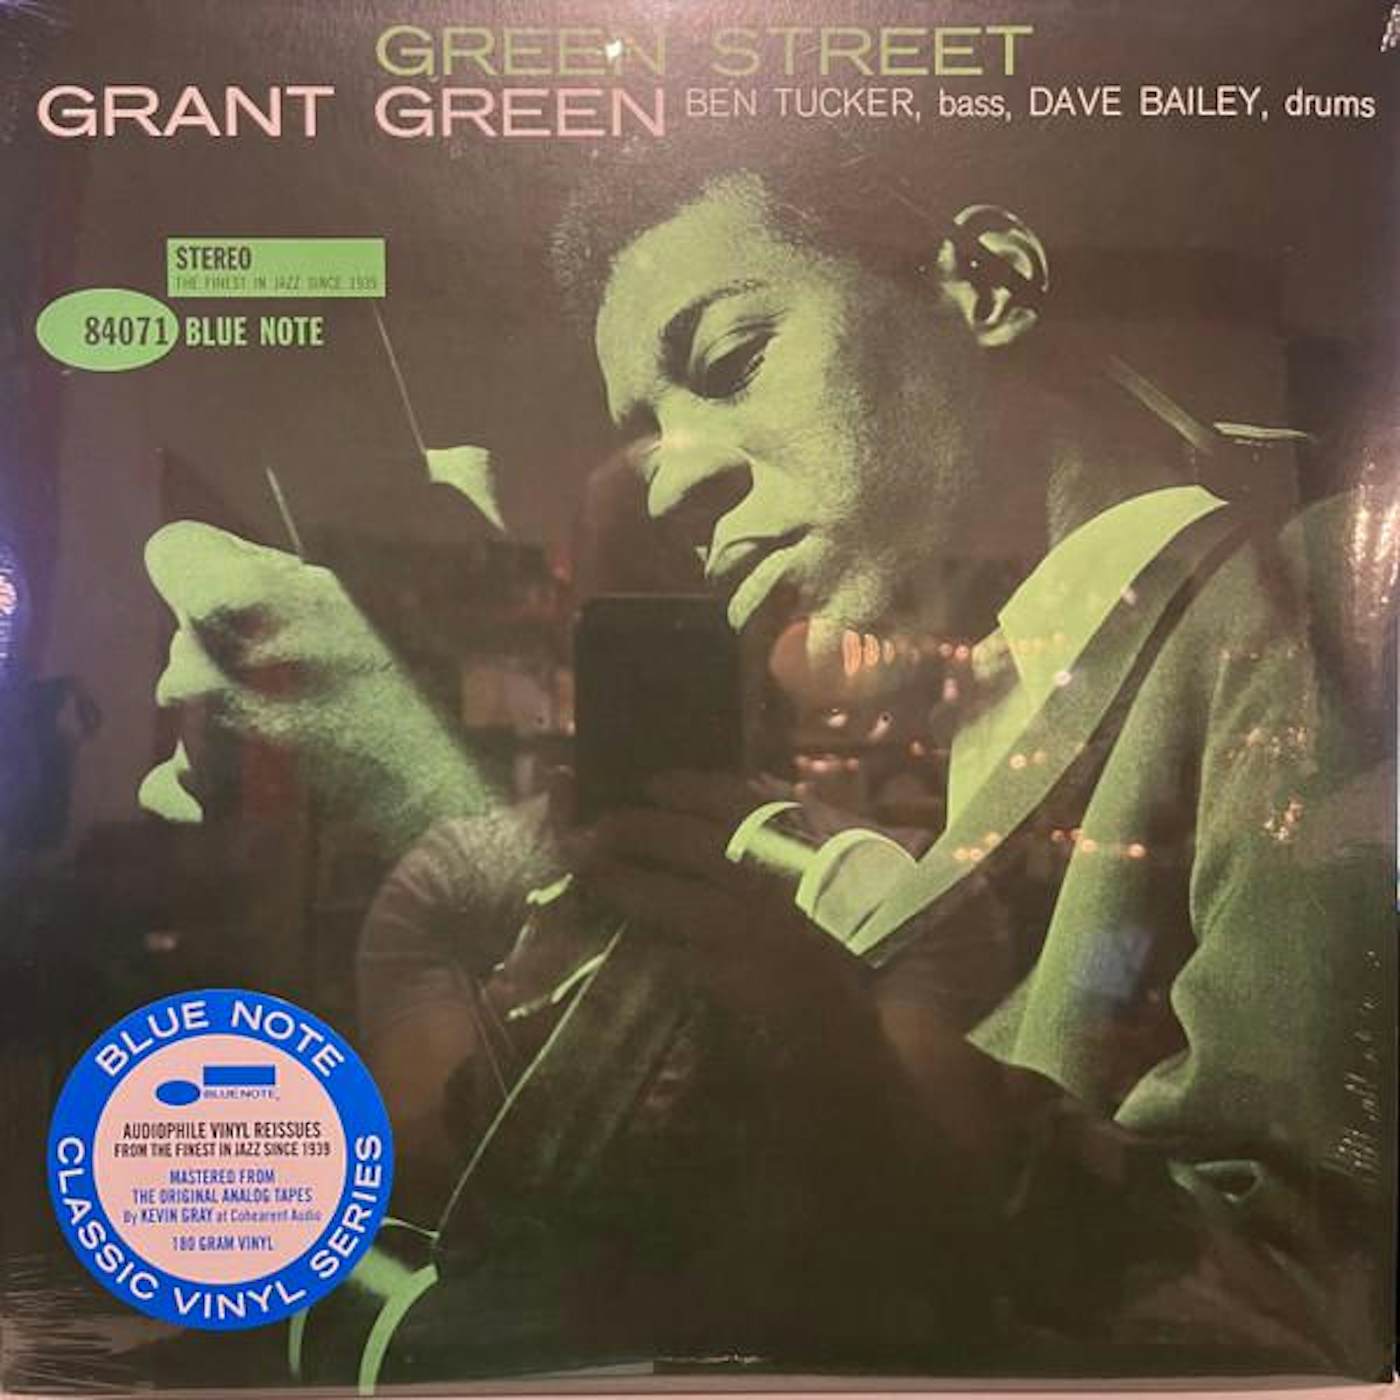 Grant Green GREEN STREET (BLUE NOTE CLASSIC VINYL SERIES) Vinyl Record